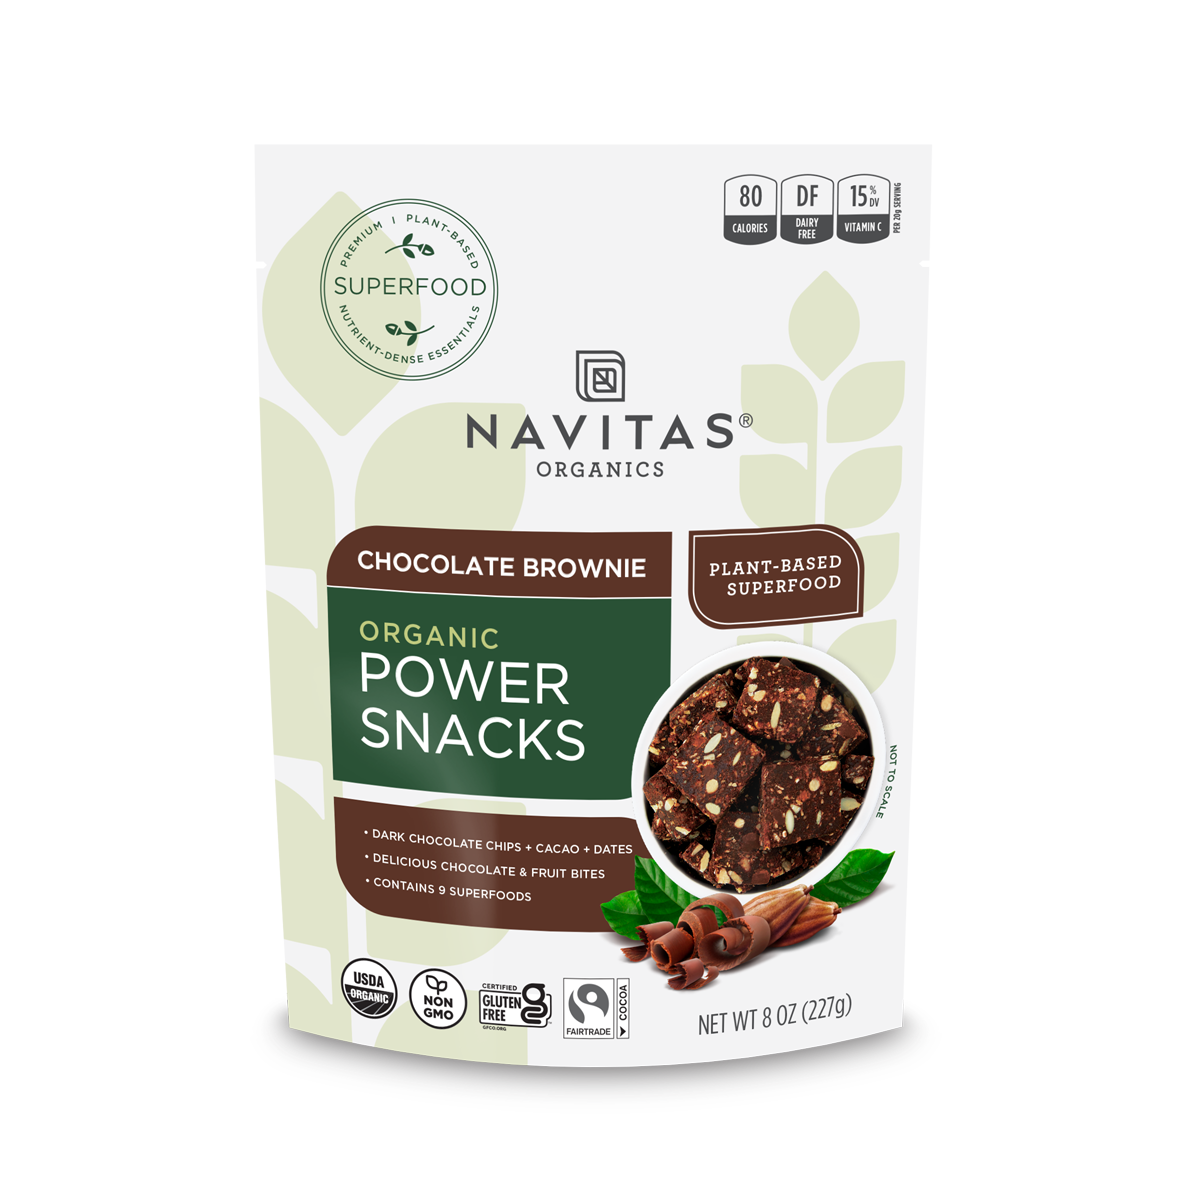 Navitas Organics Chocolate Brownie Power Snacks 8oz. front of bag.